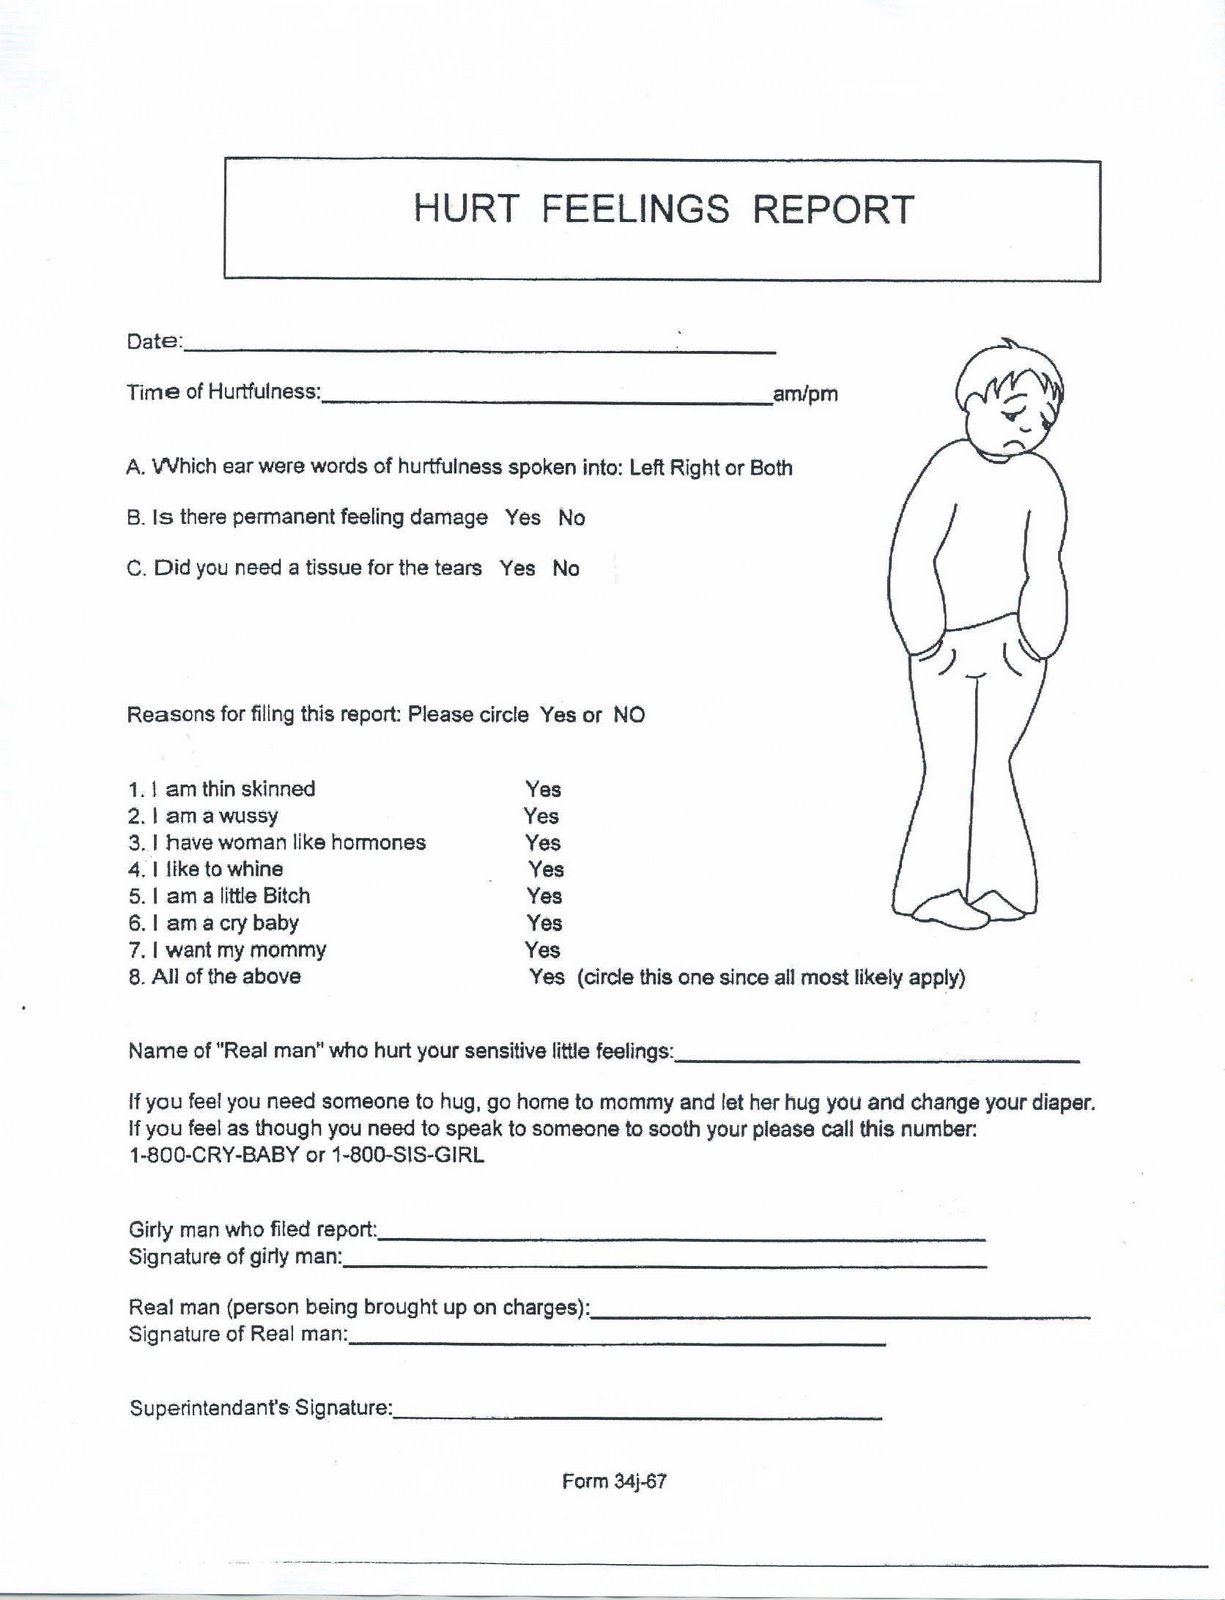 hurt feelings report form